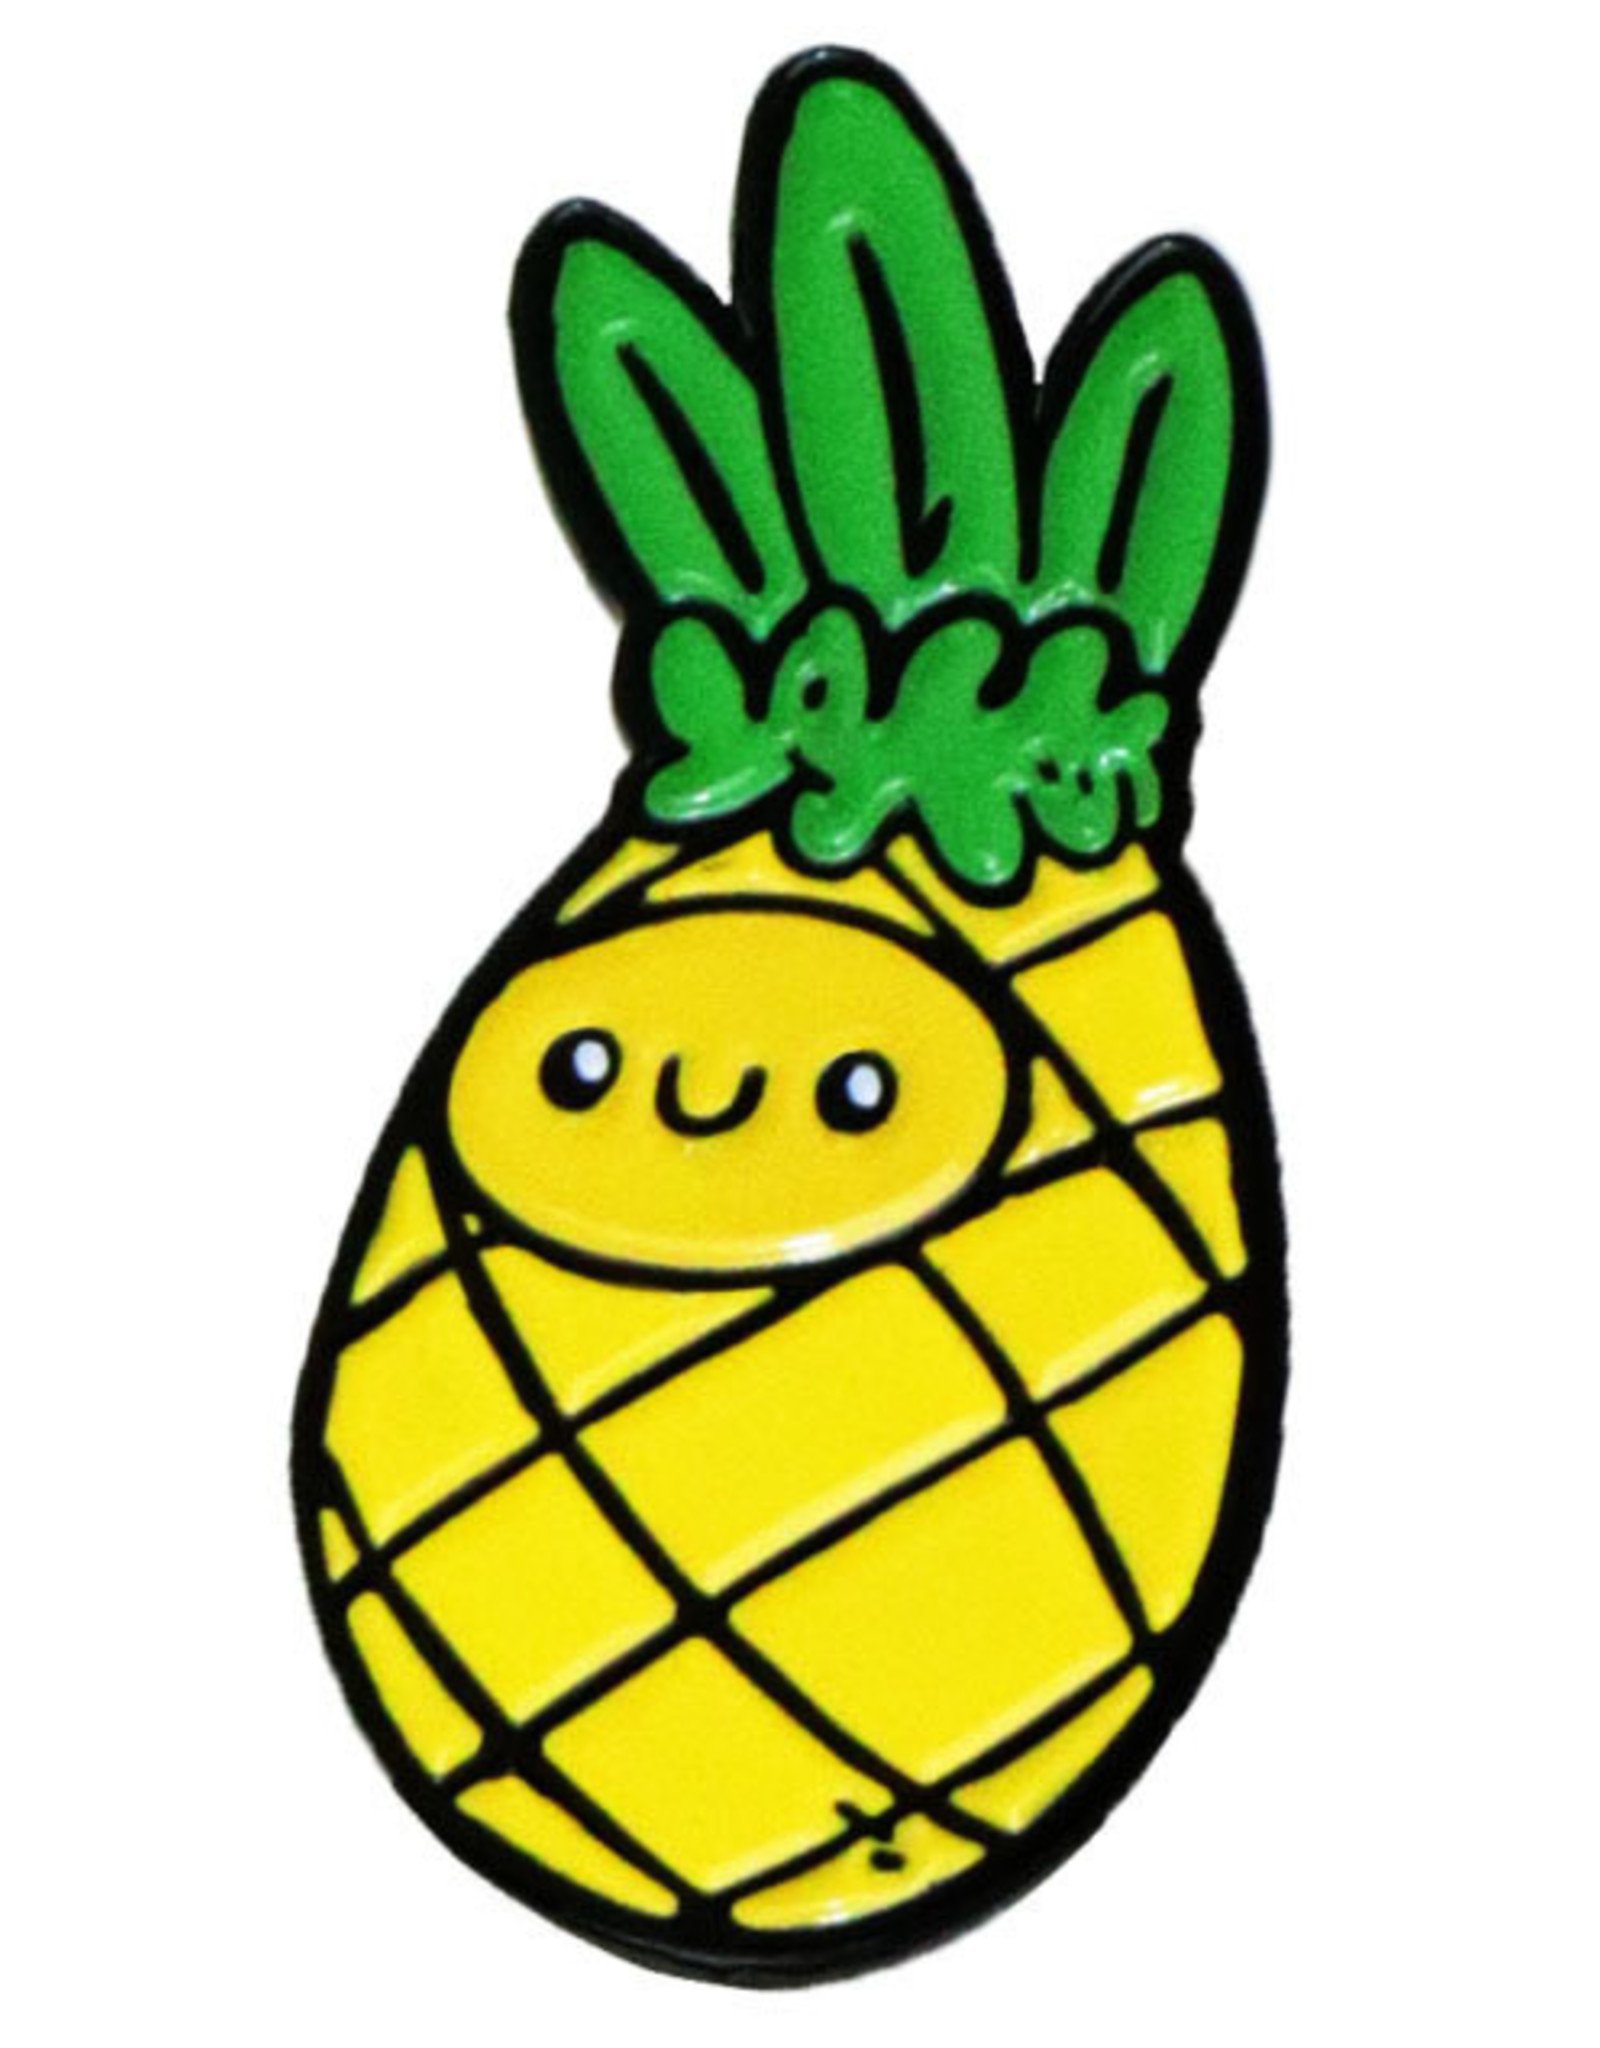 Squishable Enamel Pin - Pineapple